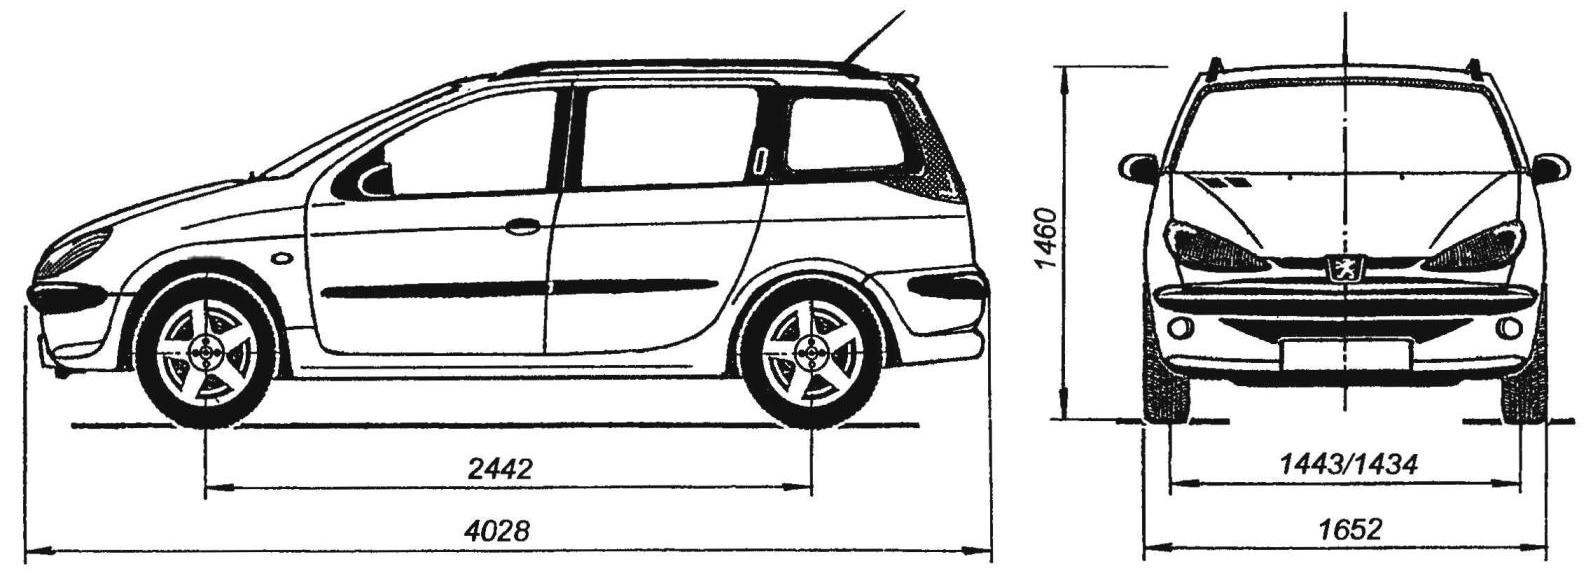 Geometric diagram of the five-door station wagon PEUGEOT 206SW